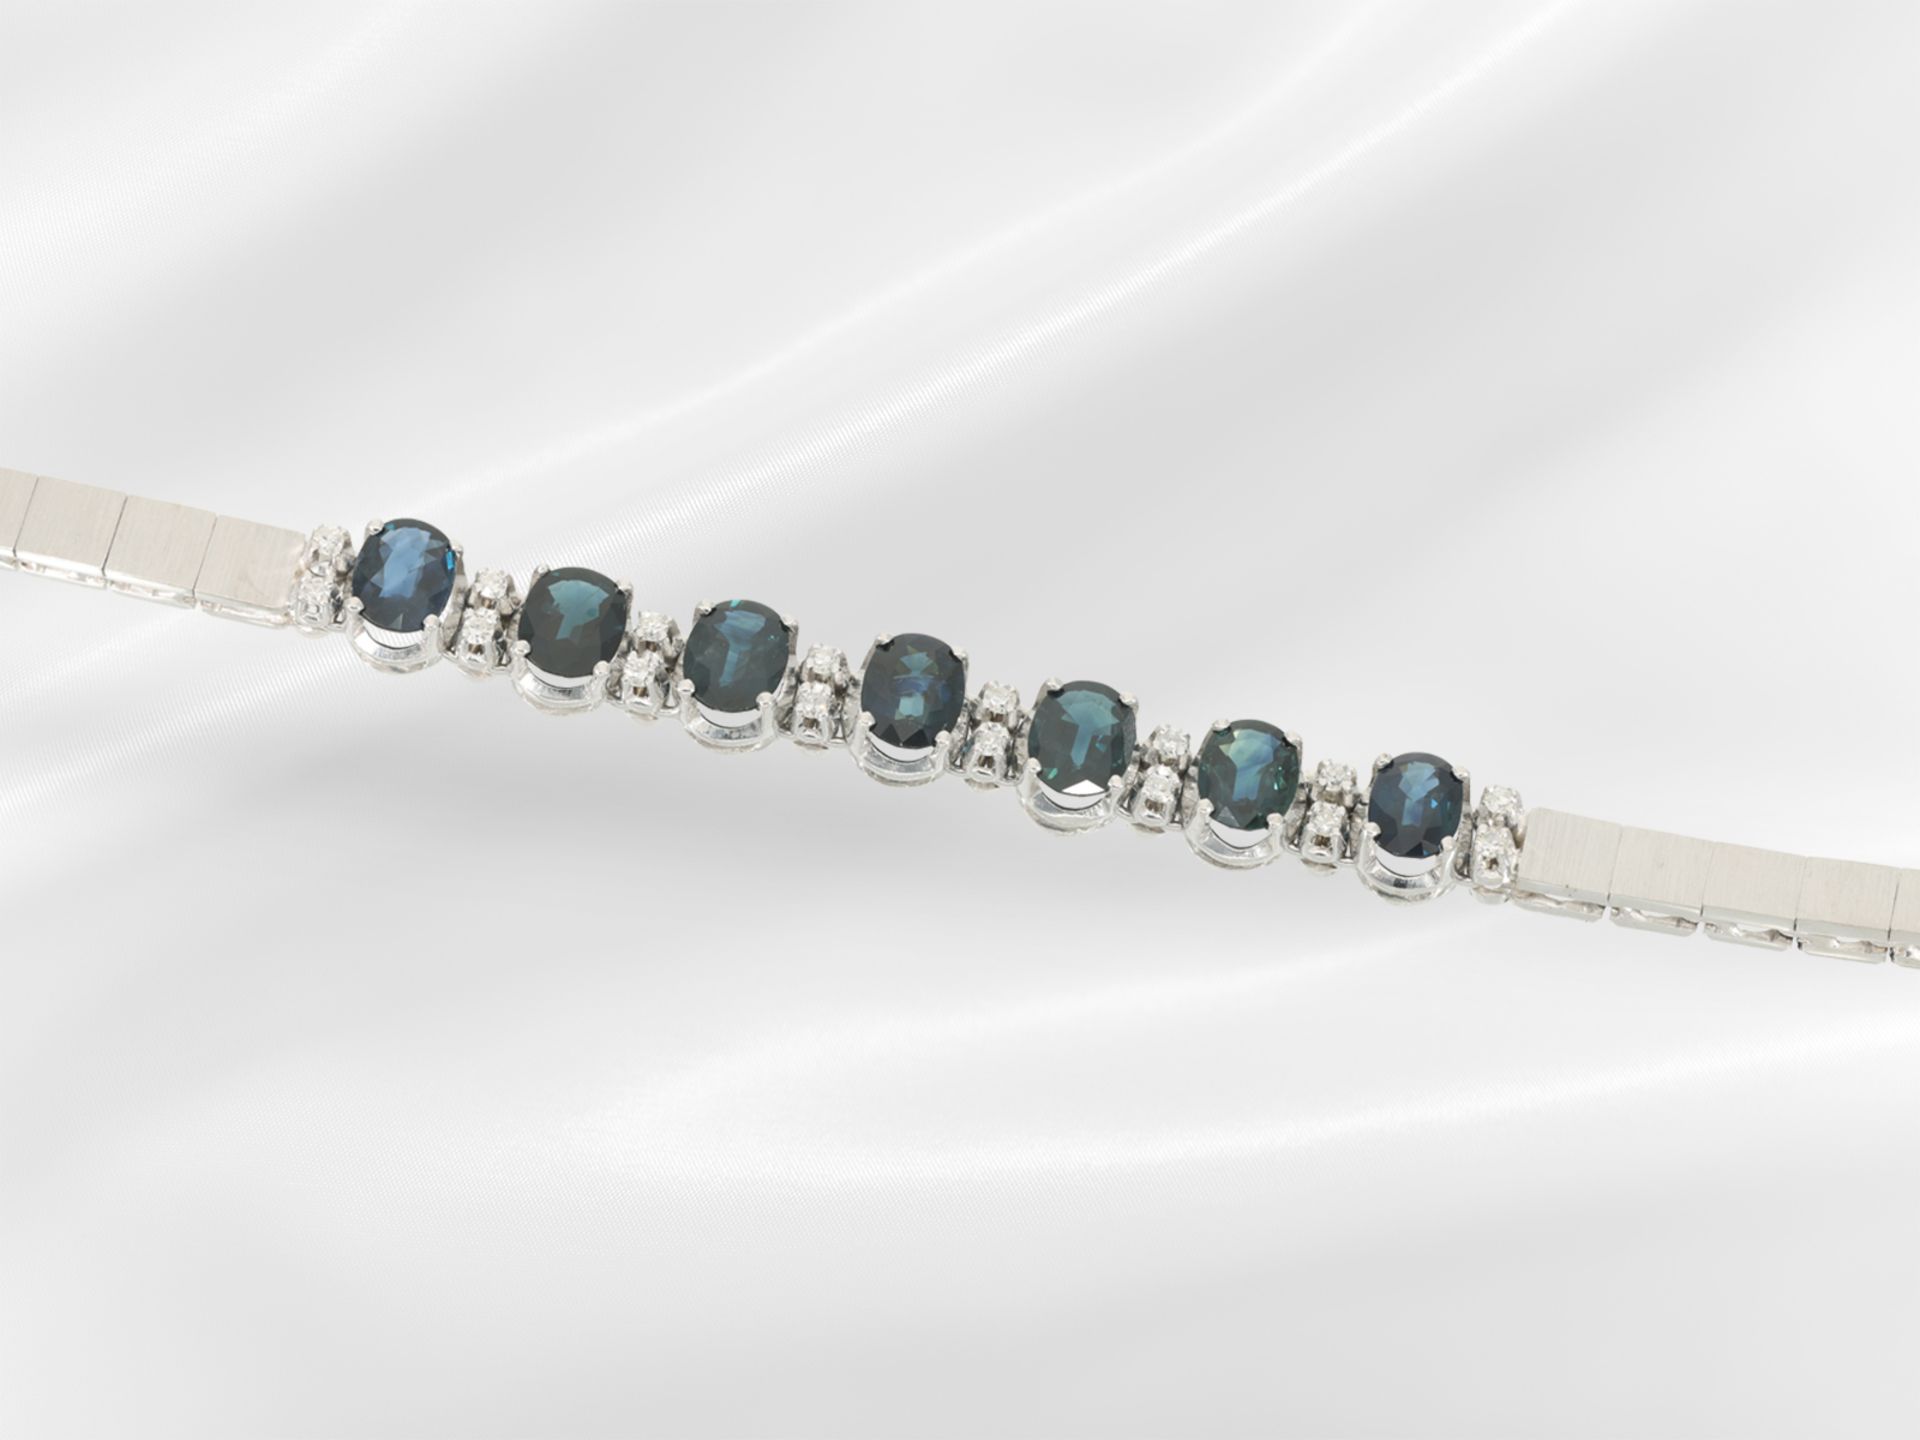 Bracelet: decorative vintage sapphire/diamond bracelet, 18K white gold - Image 4 of 5